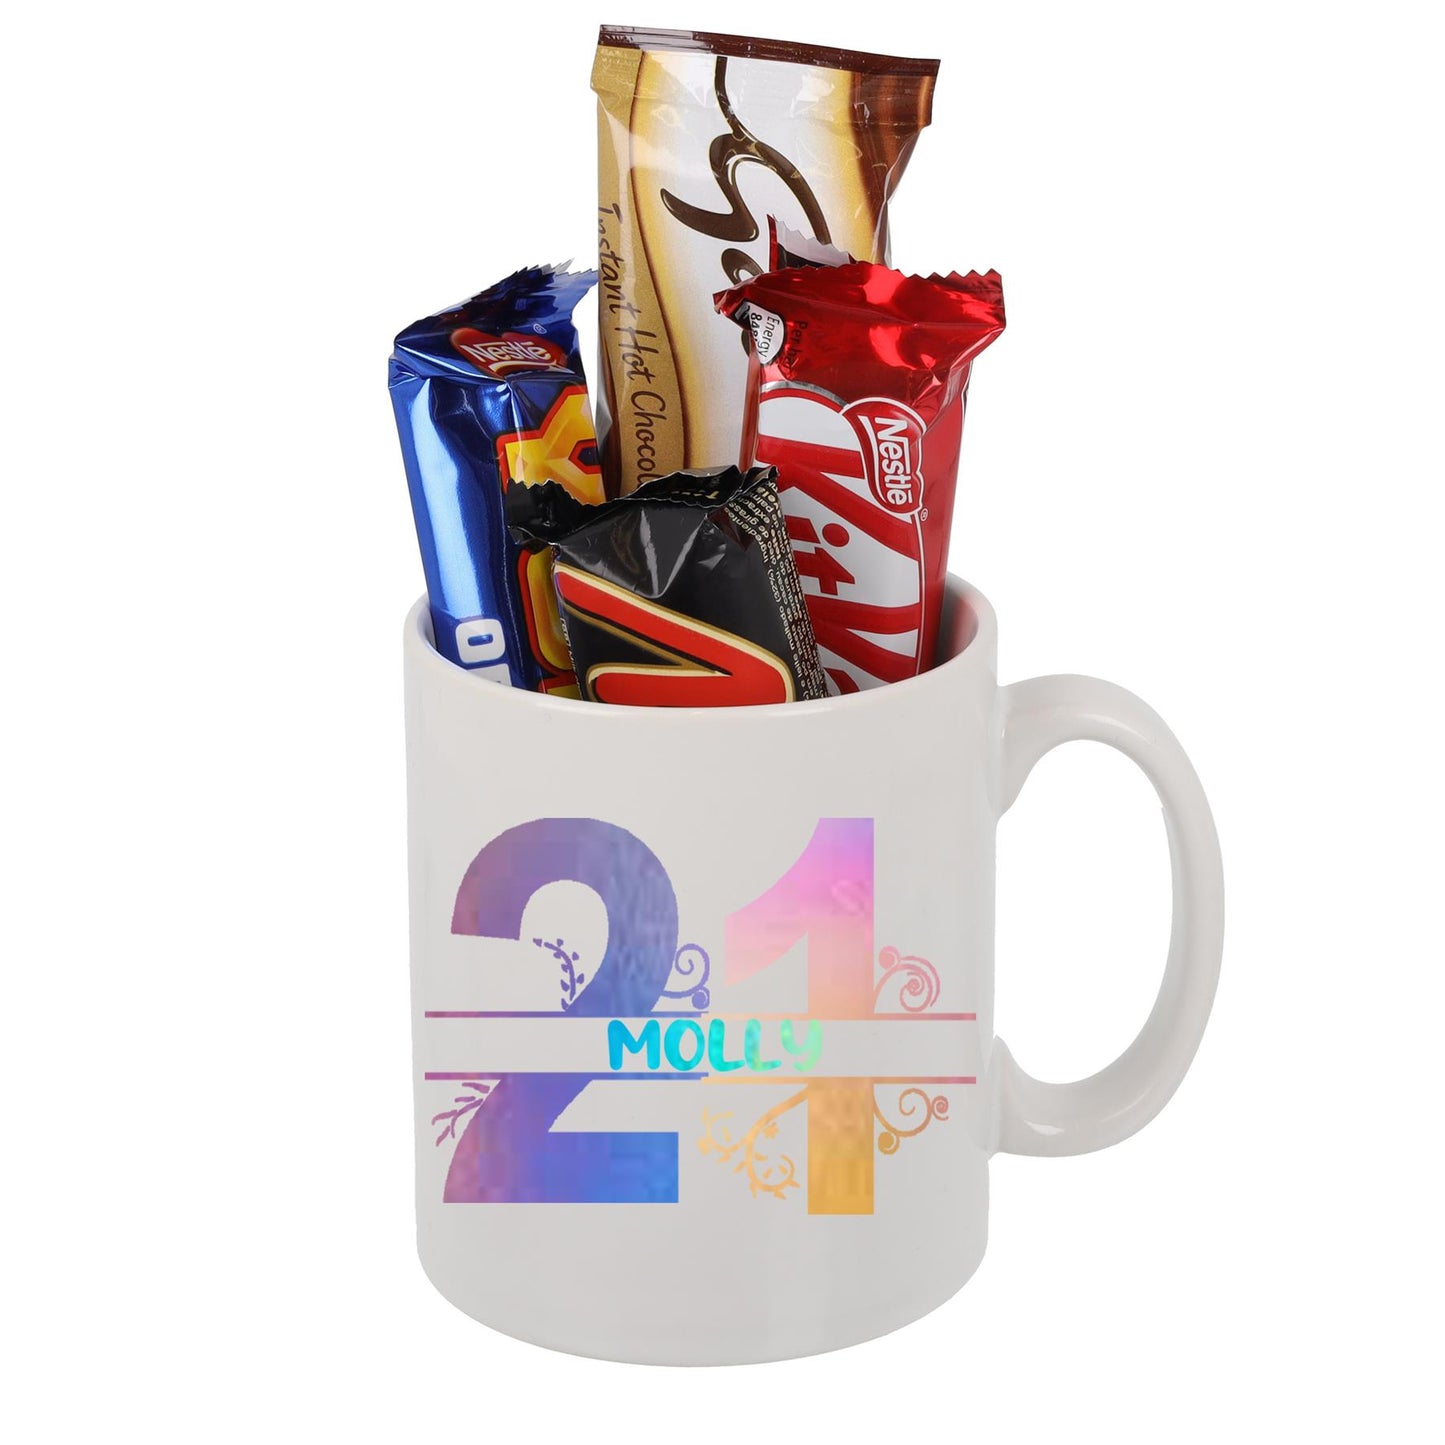 Personalised Filled 21st Birthday Mug  - Always Looking Good -   